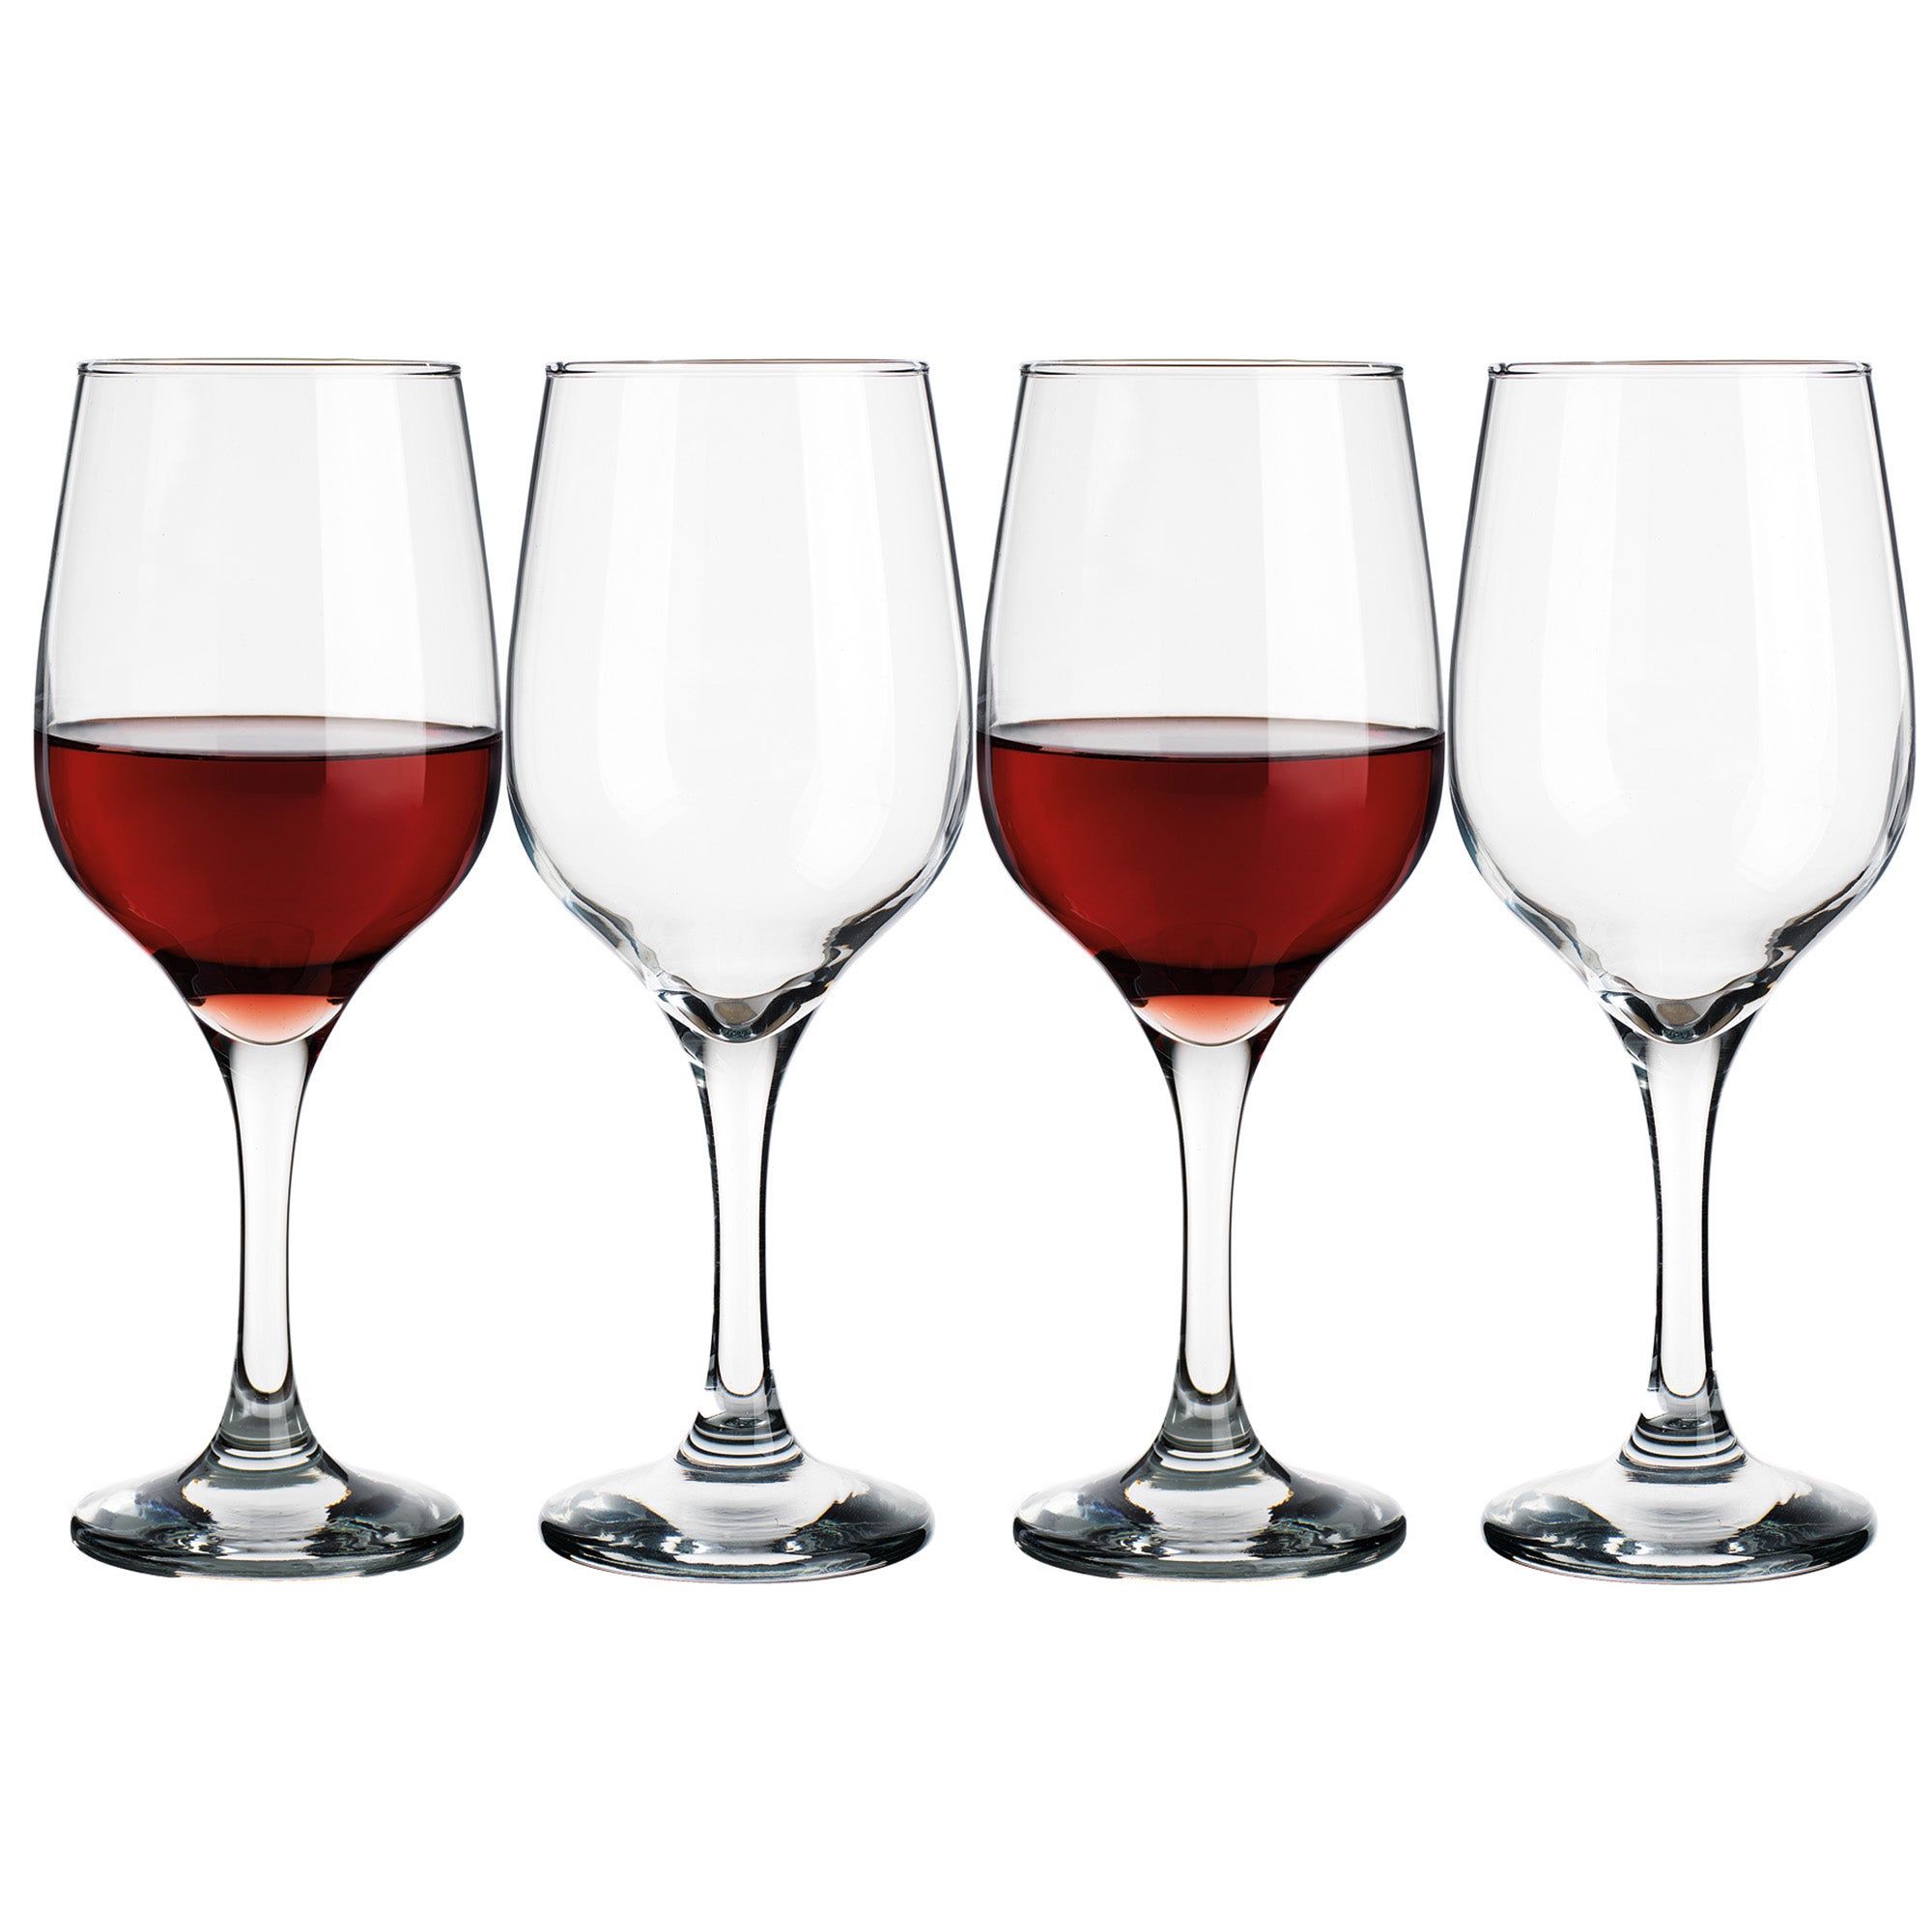 View Home Essentials - Wine Glasses